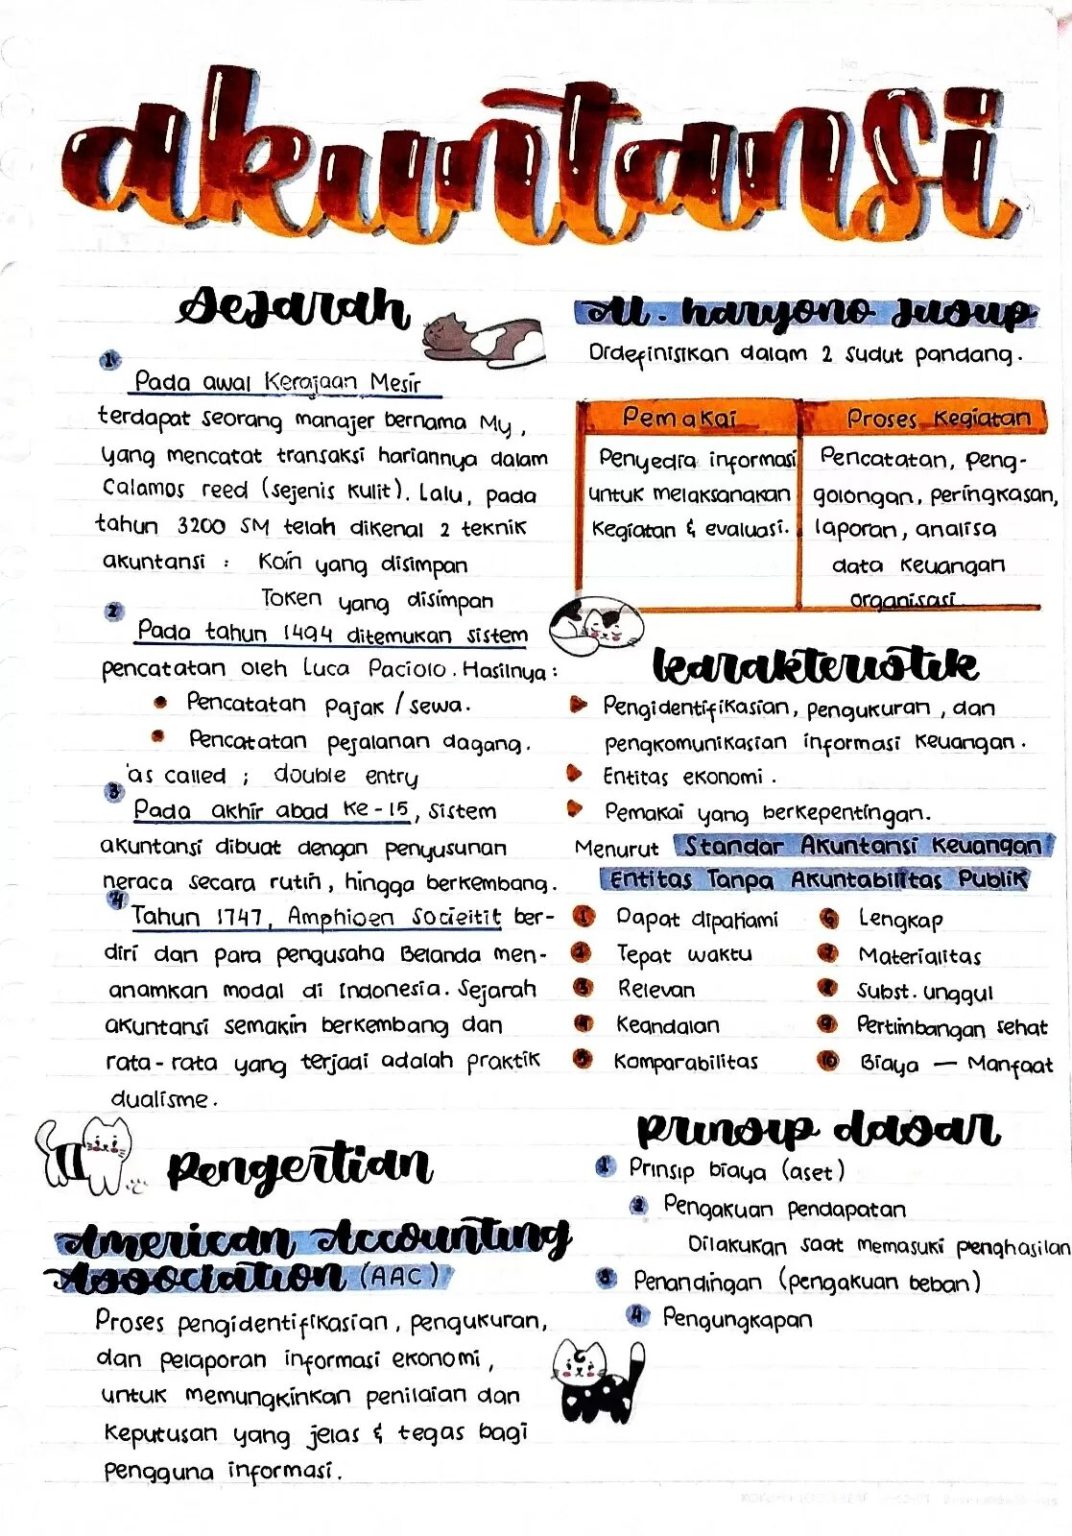 Kumpulan Catatan Aesthetic Kelas 12 - Page 2 of 2 - Clear Indonesia News